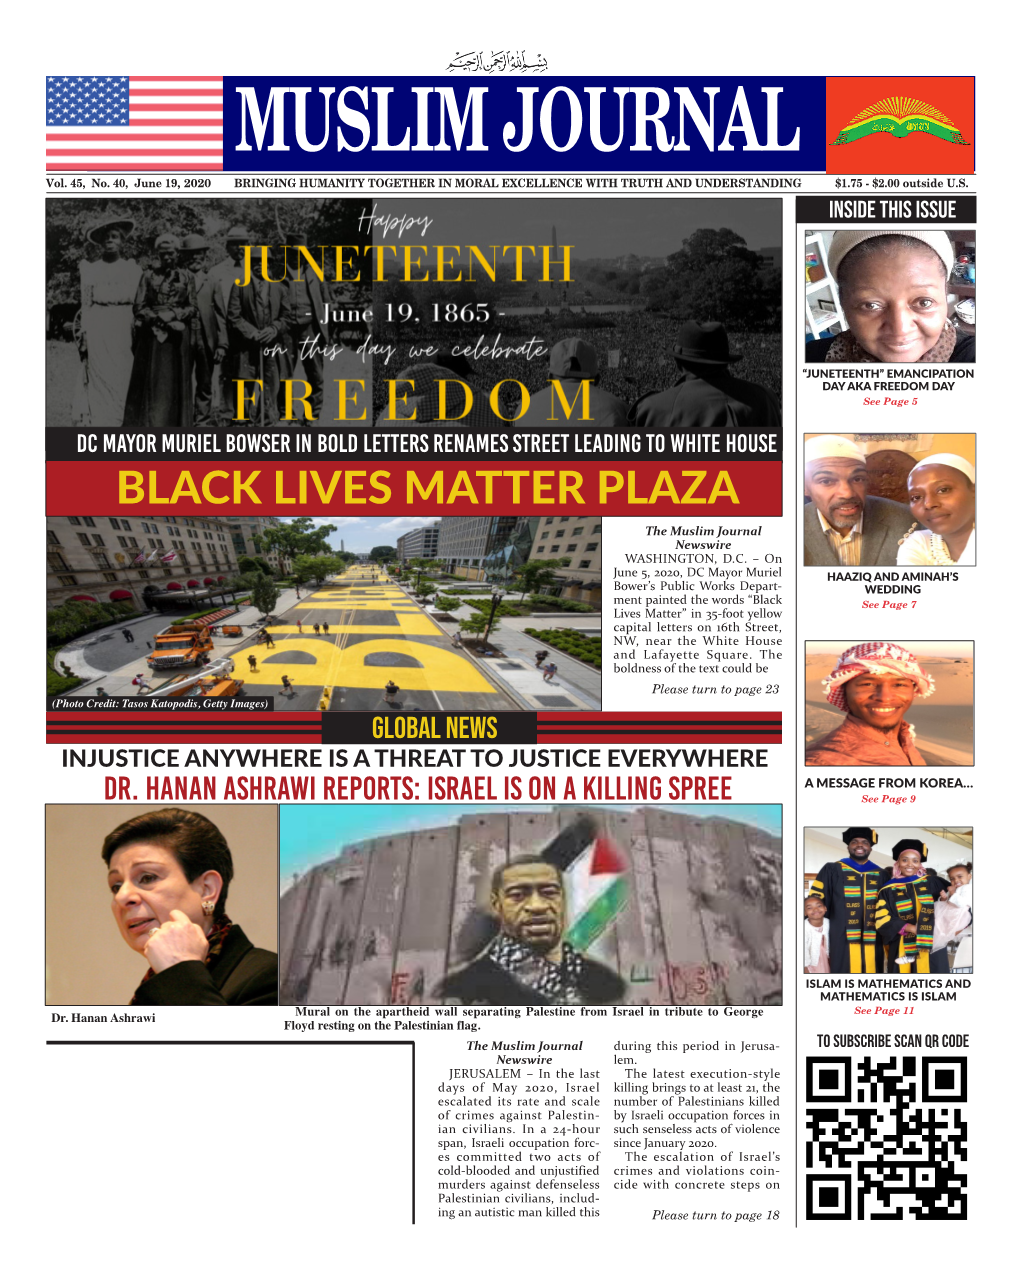 BLACK LIVES MATTER PLAZA the Muslim Journal Newswire WASHINGTON, D.C